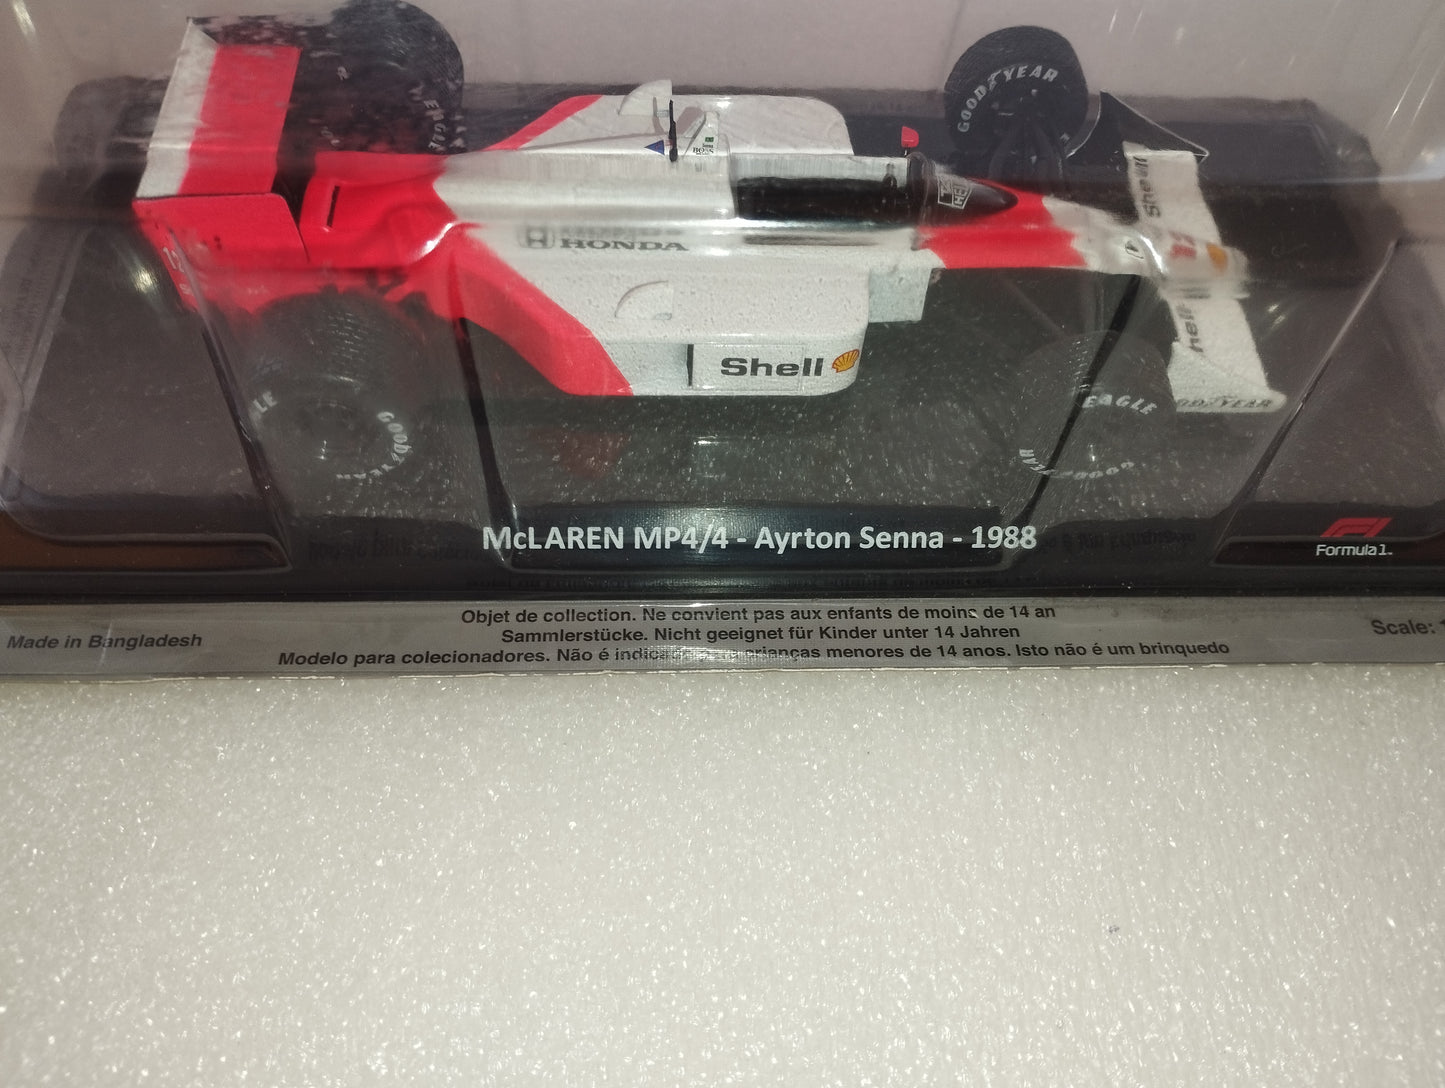 Model "McLaren MP4/4 Ayrton Senna 1988" 1:24 scale